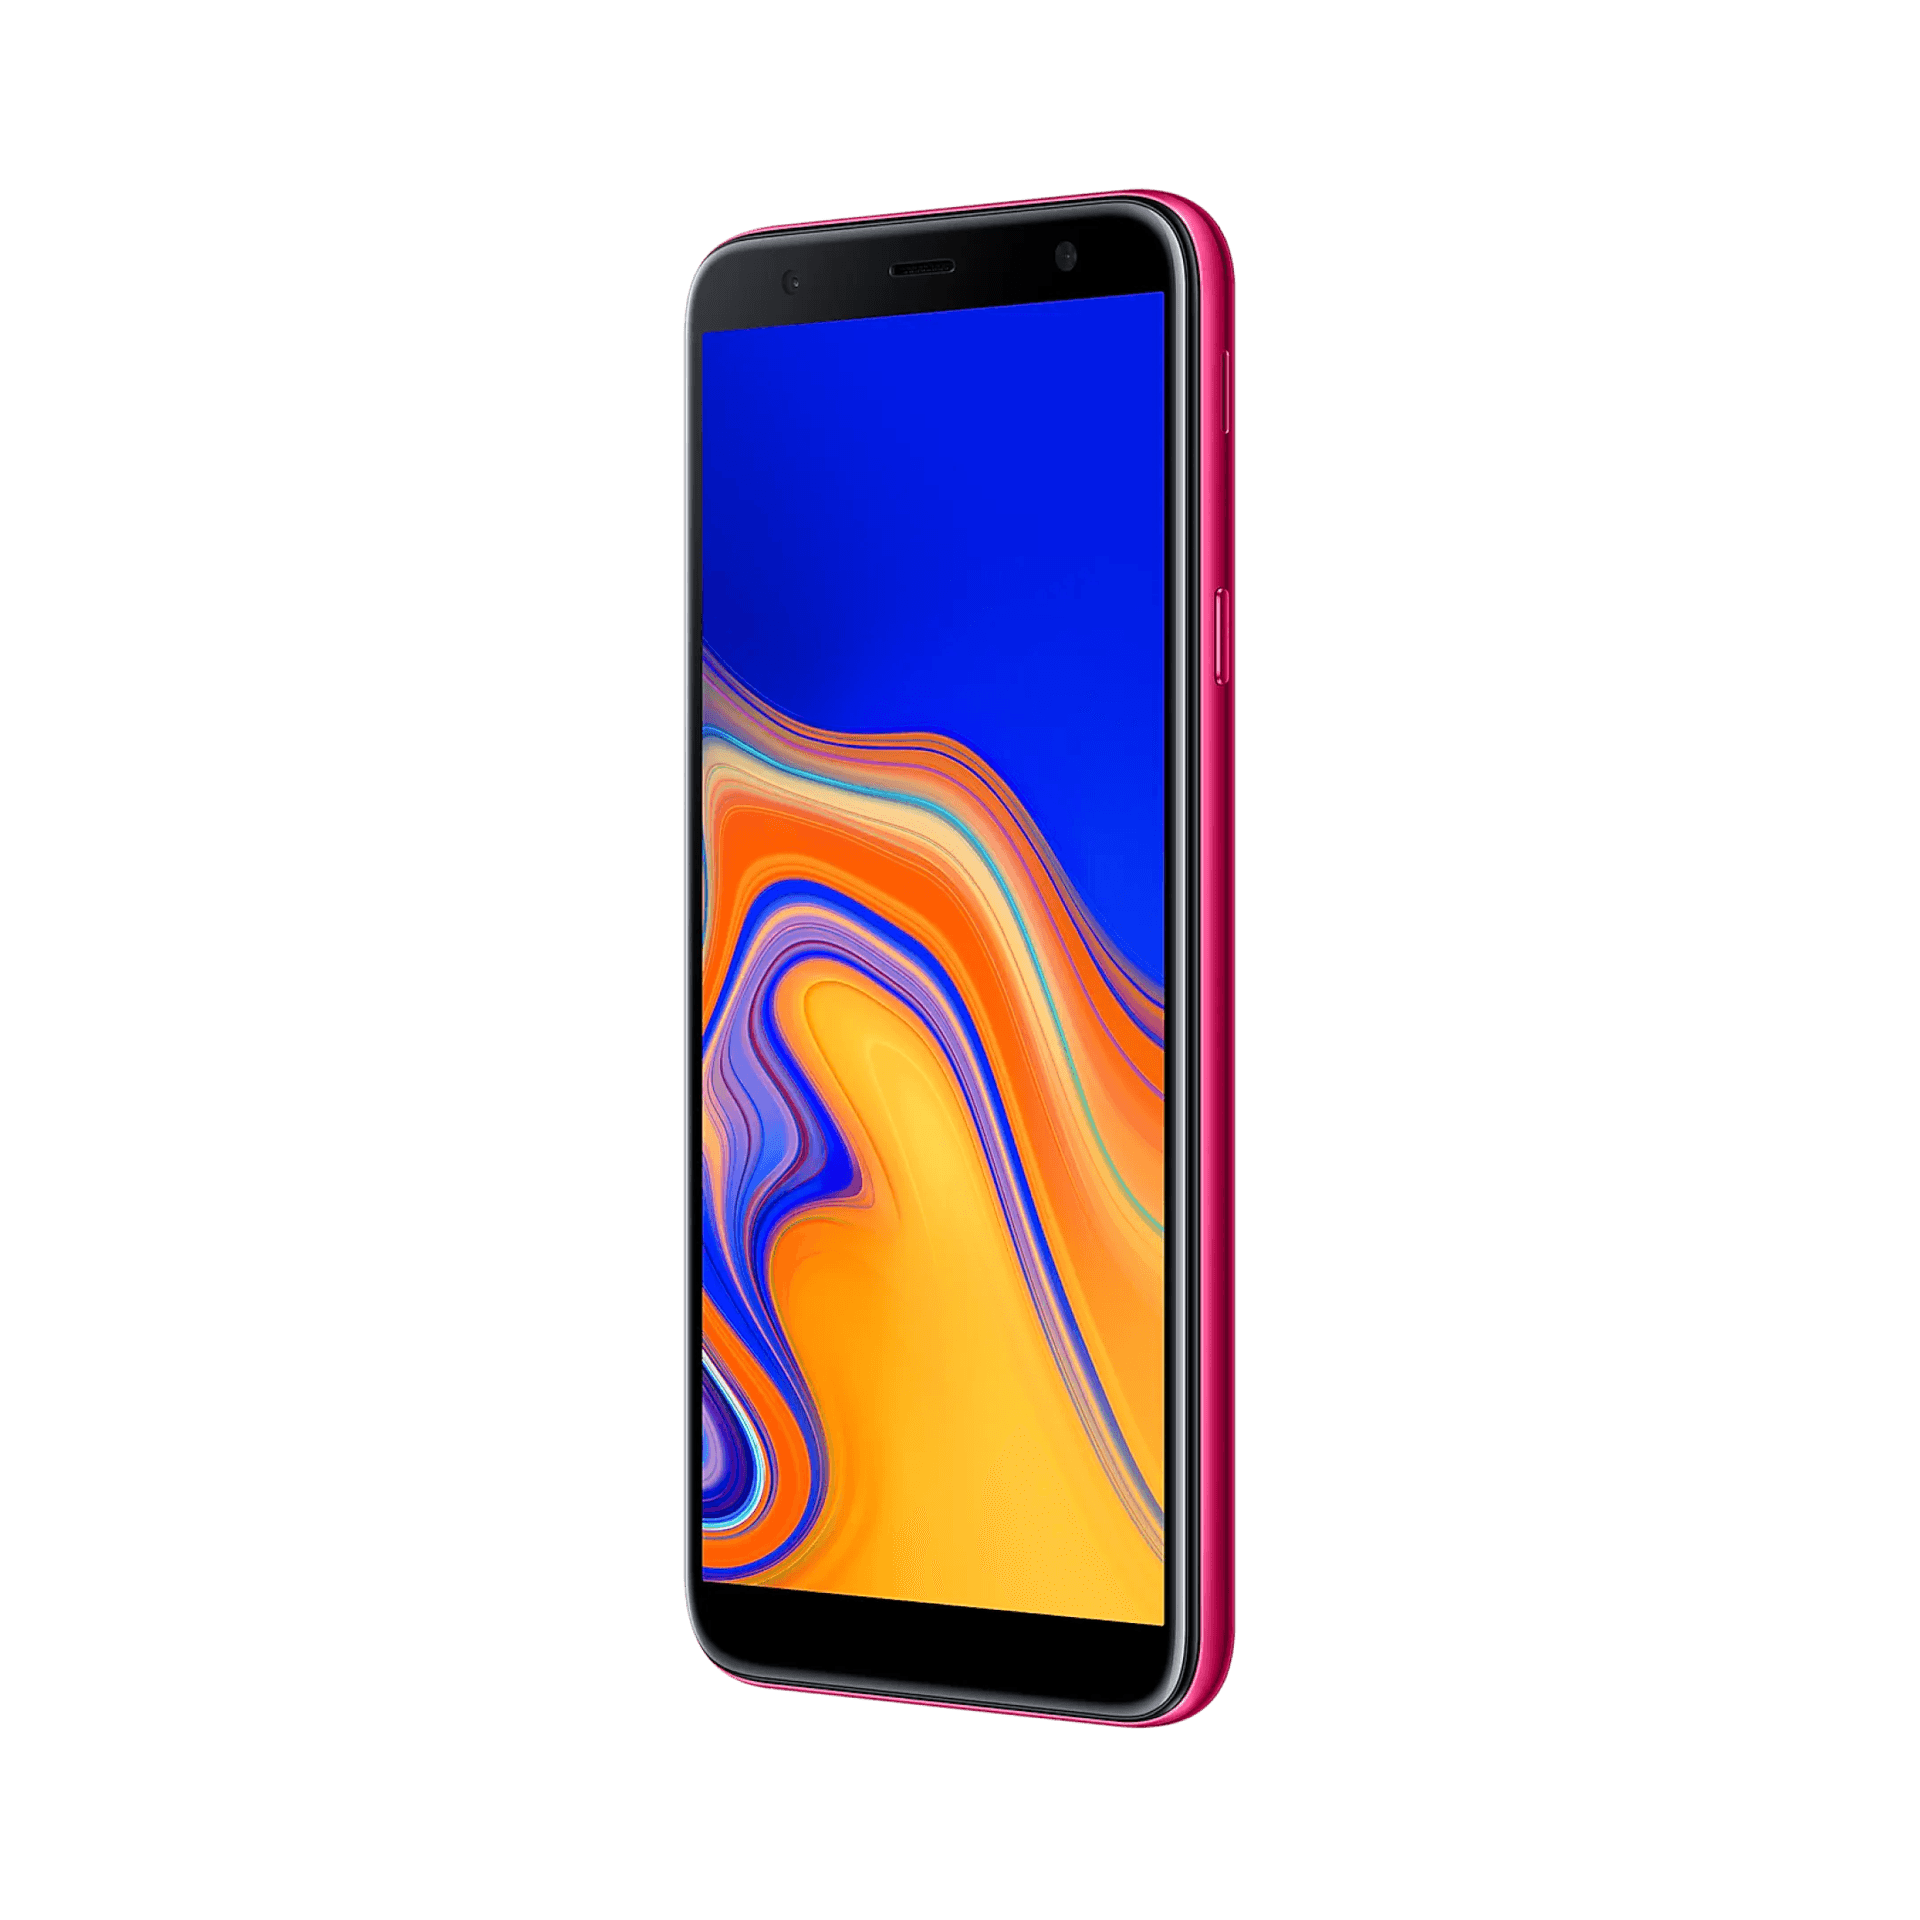 Samsung Galaxy J4 Plus - 16 GB - Pembe